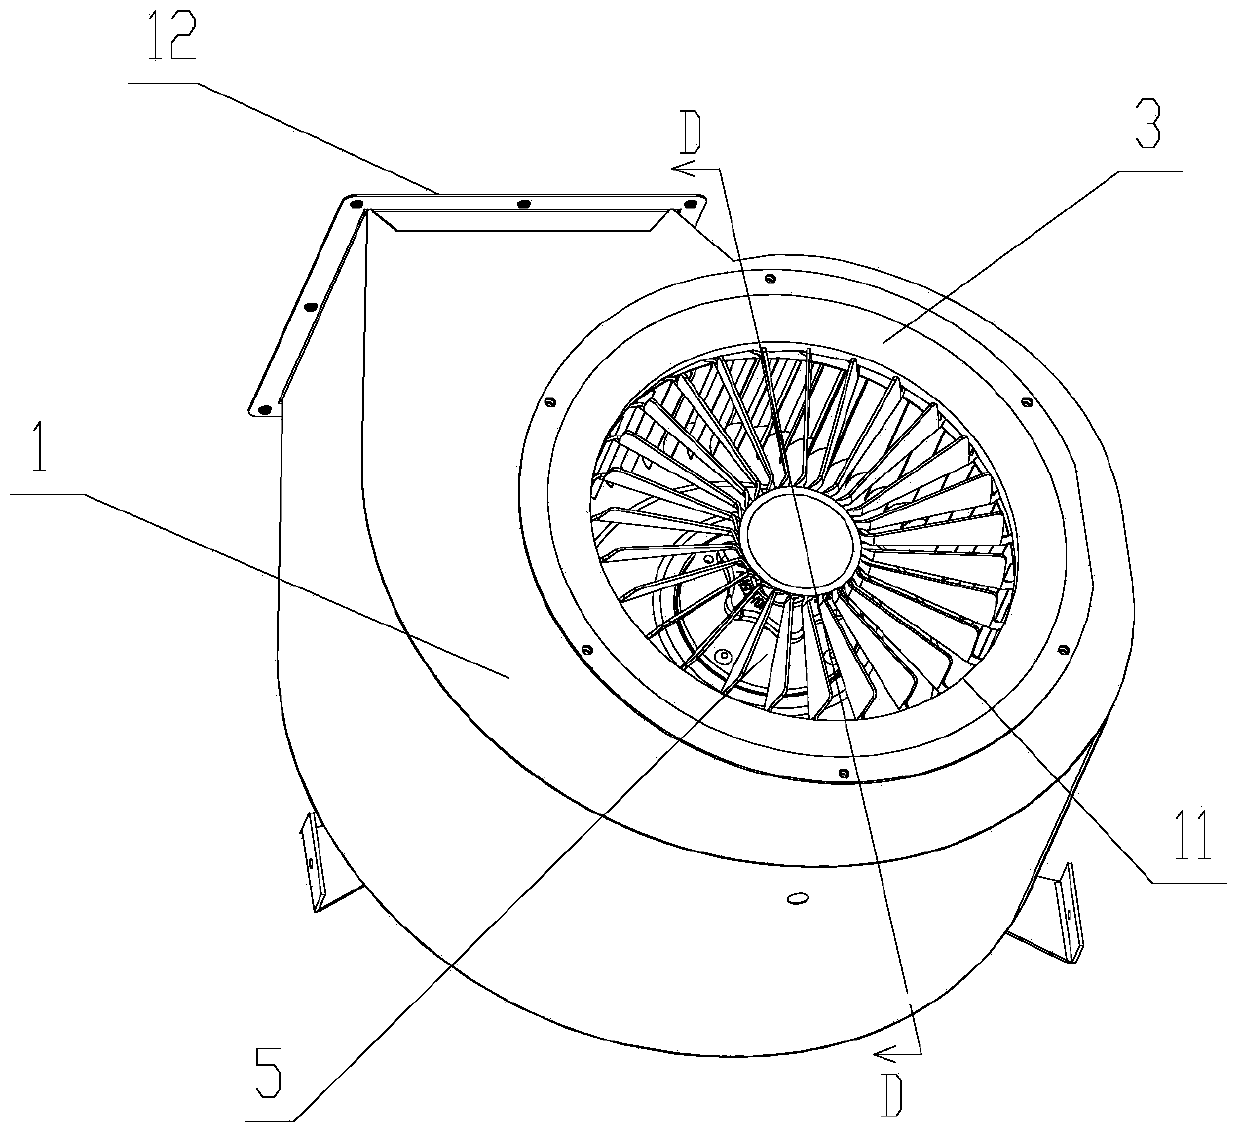 Multi-wing centrifugal fan